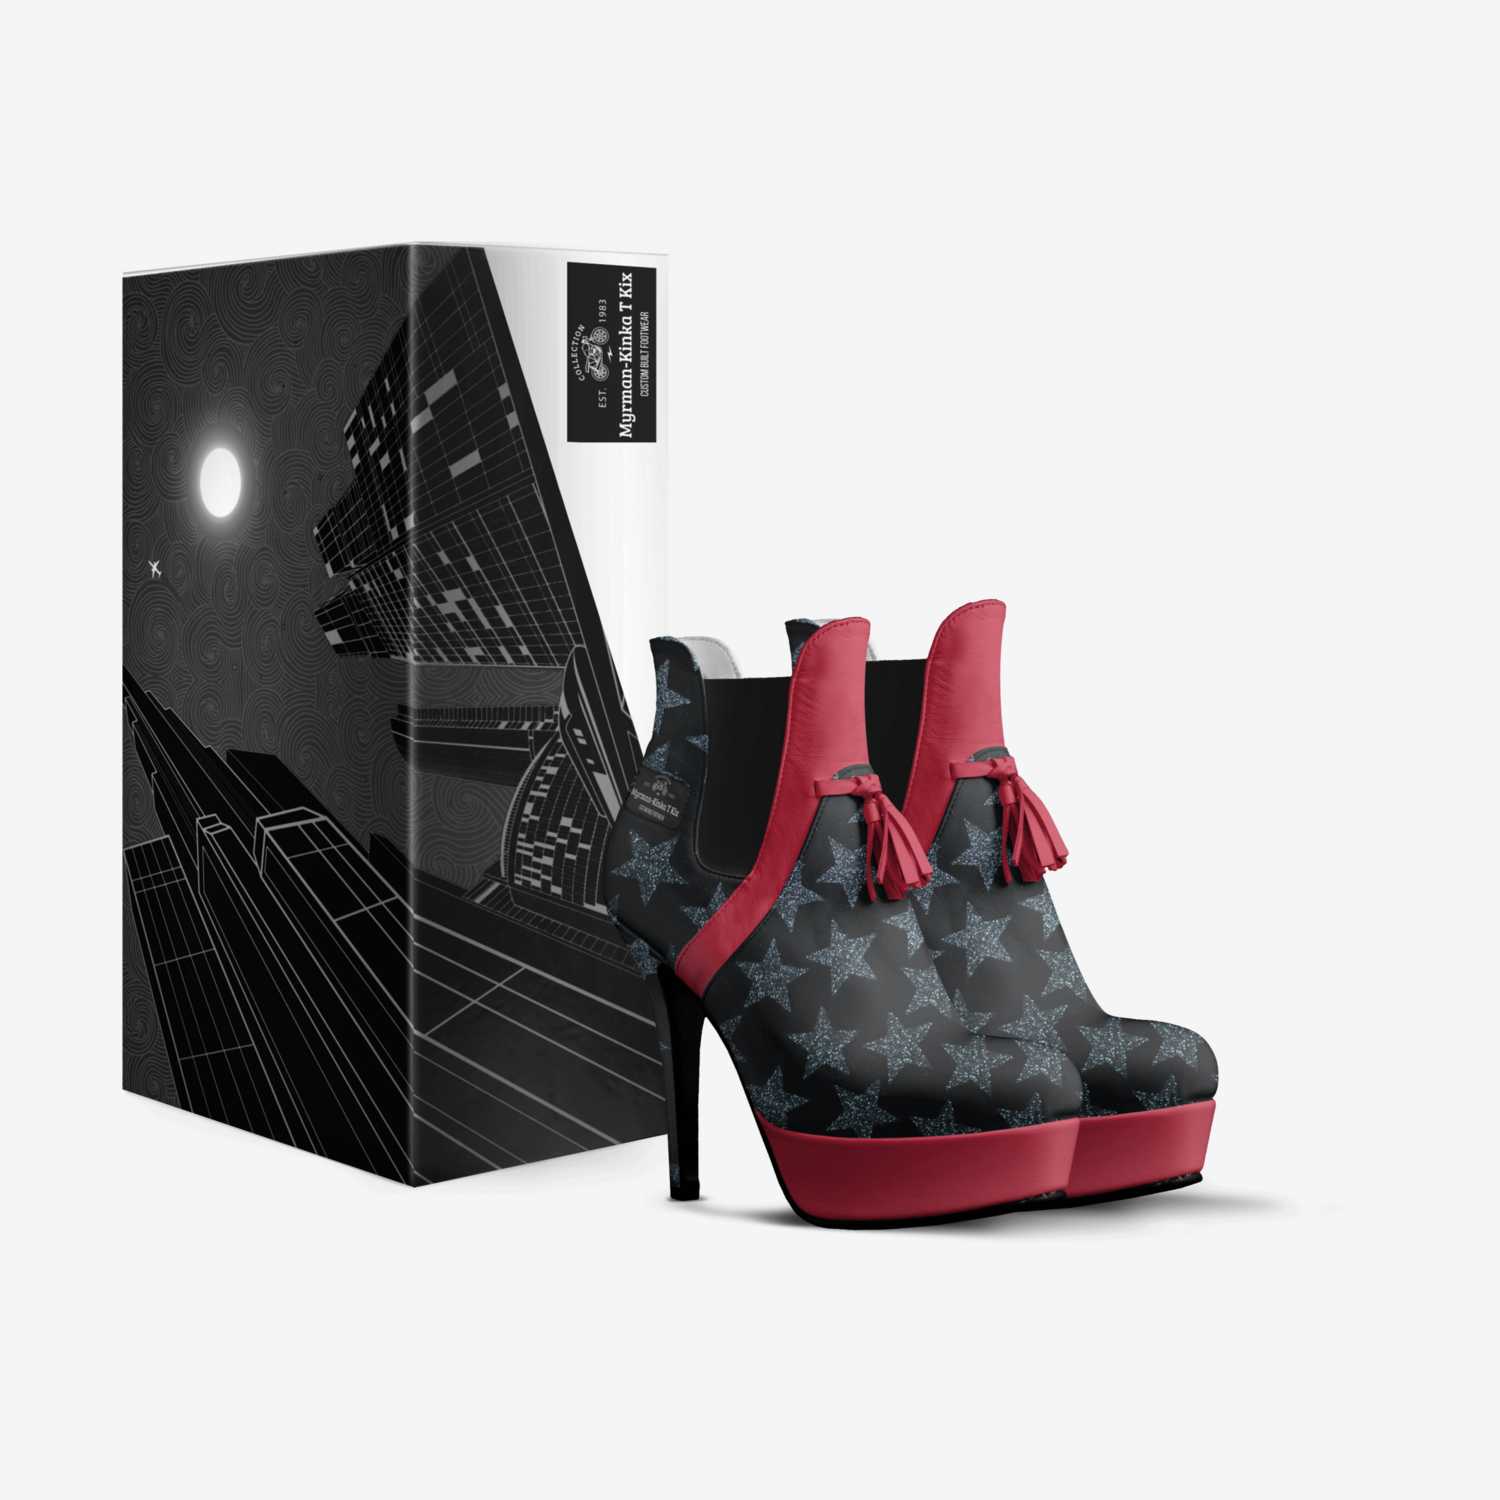 Myrman-Kinka T Kix custom made in Italy shoes by Kinka T Kix | Box view